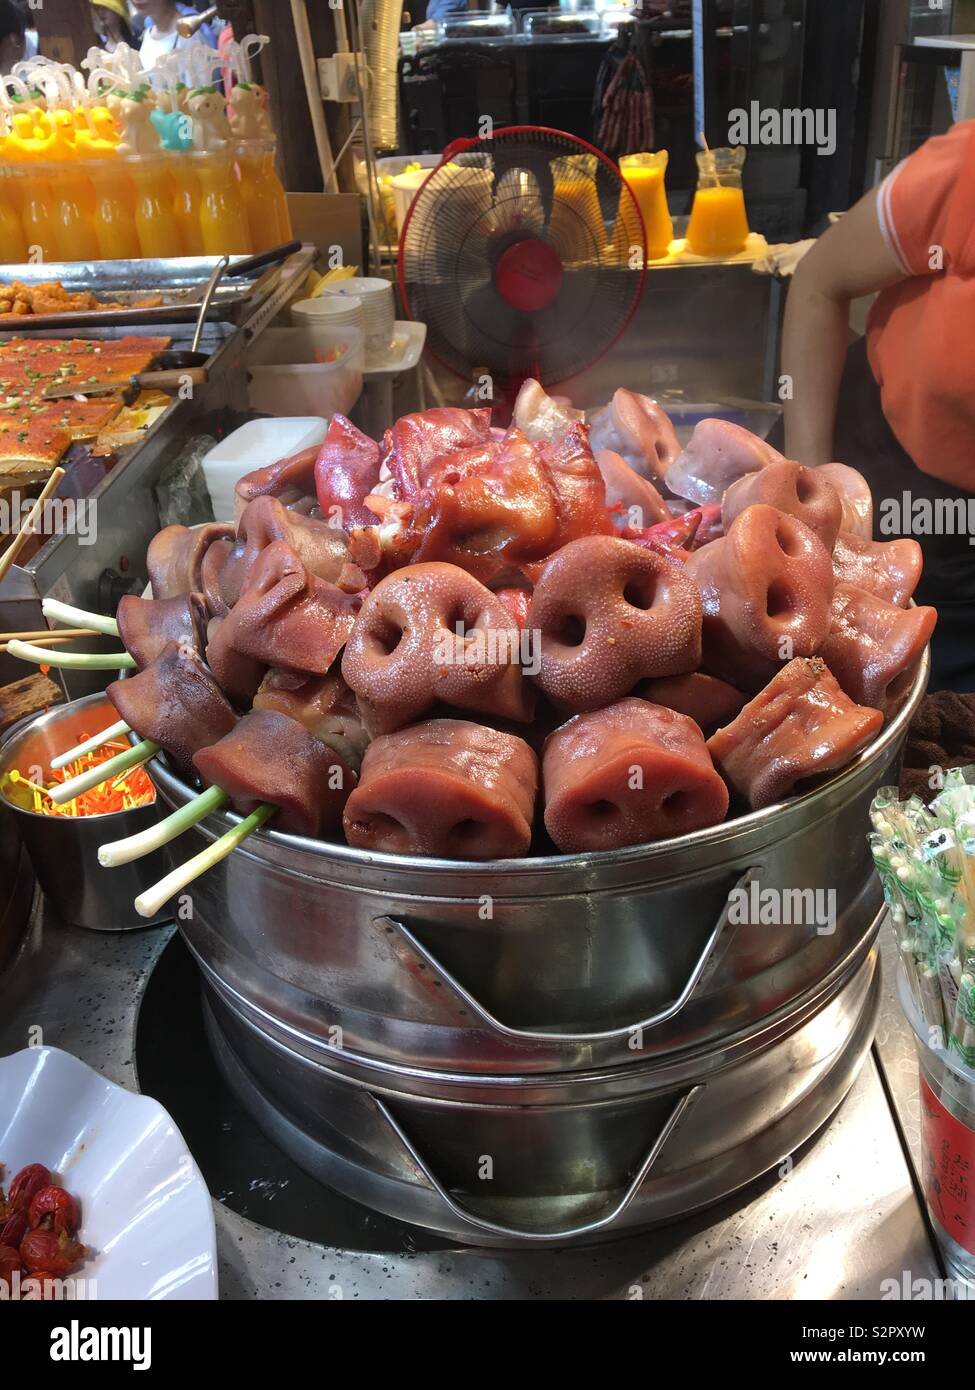 Pig snouts per la cena in Cina Foto Stock